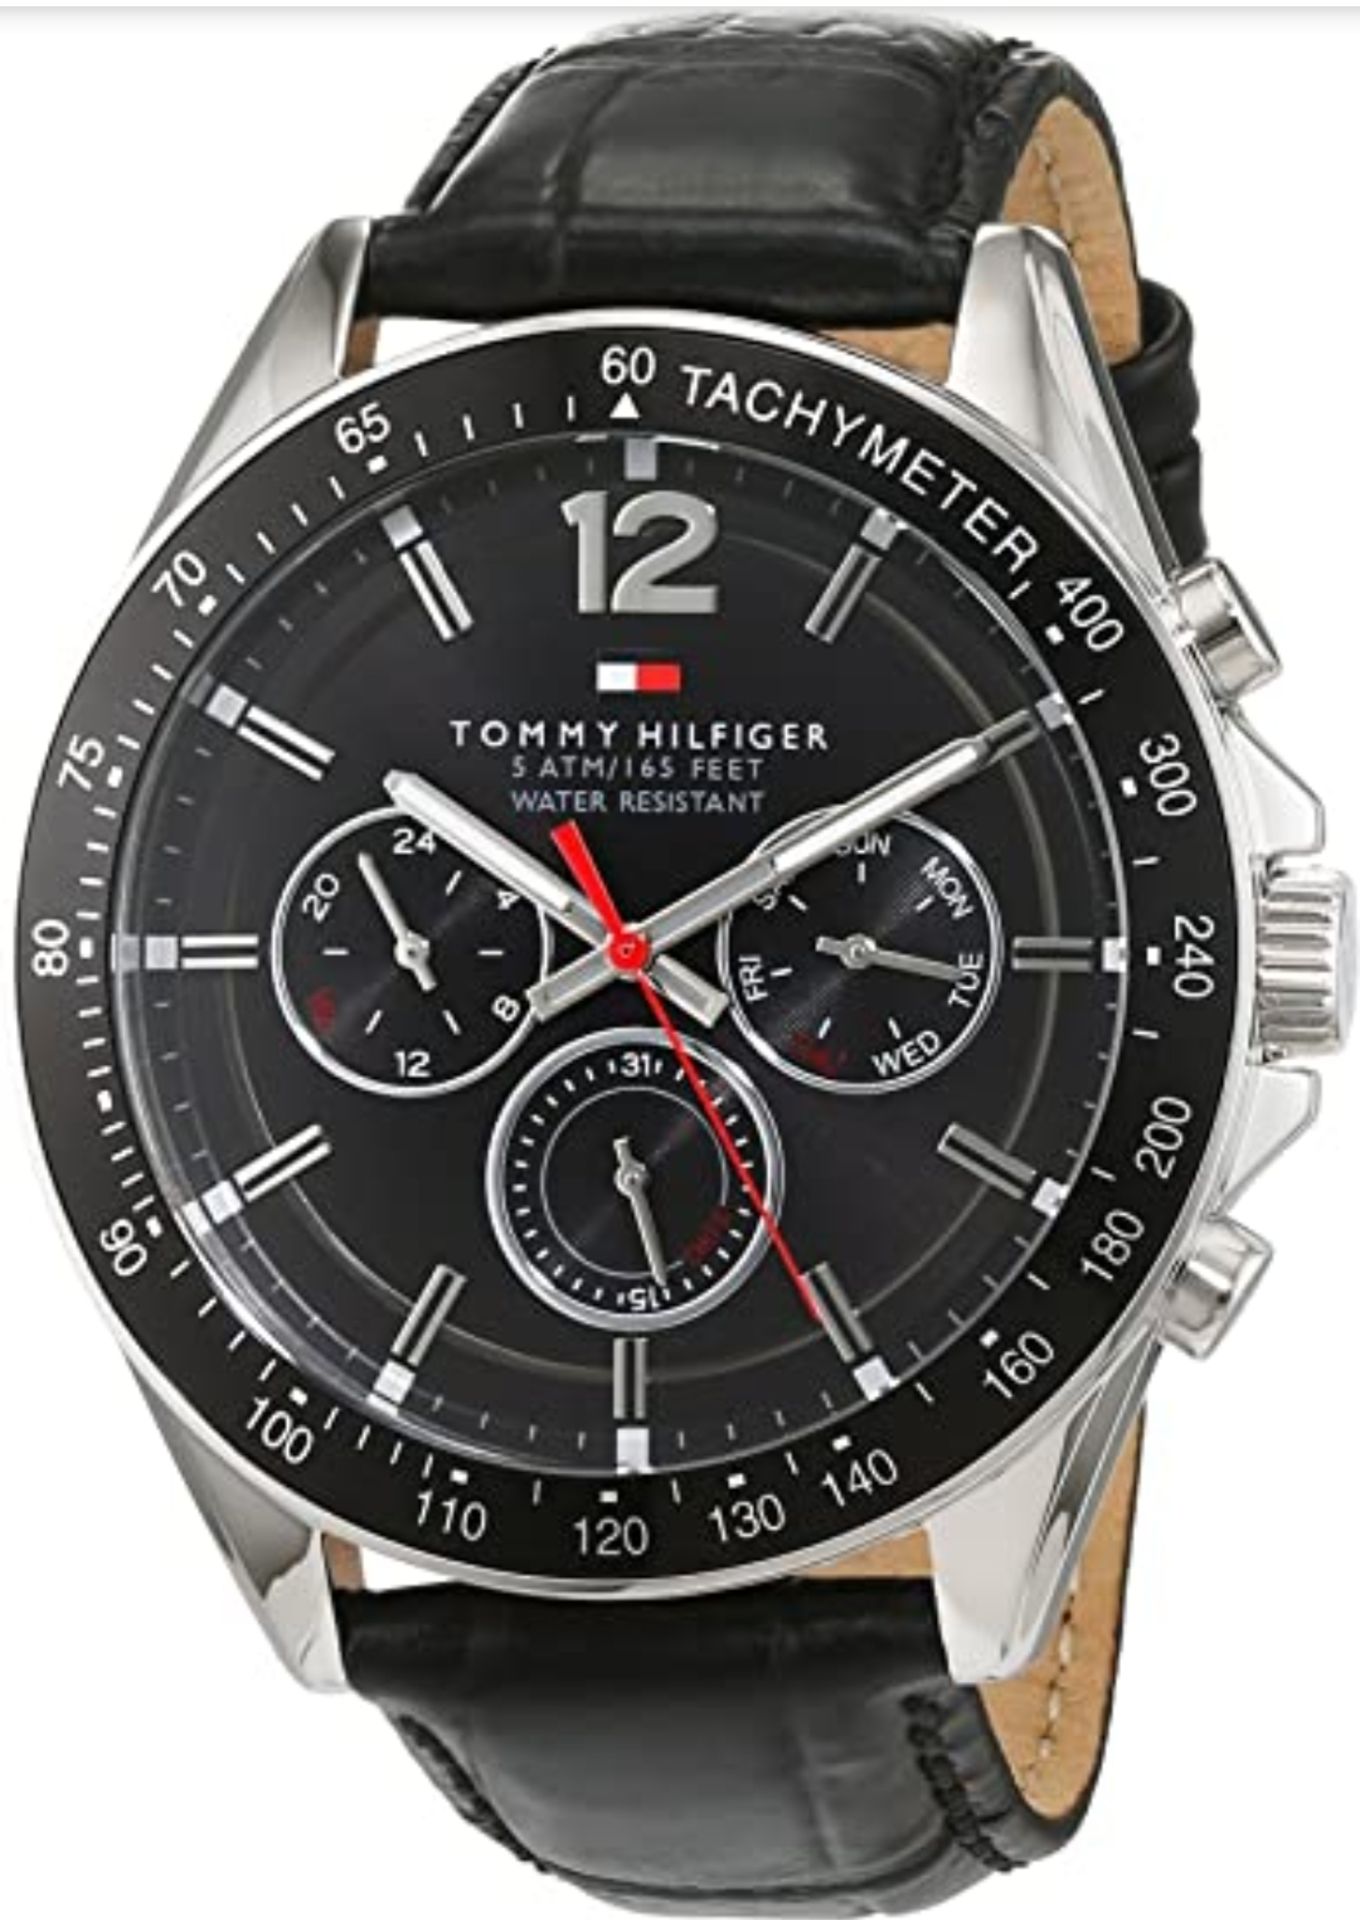 Tommy Hilfiger 1791117 Men's Black Dial Black Leather Watch - Image 2 of 8